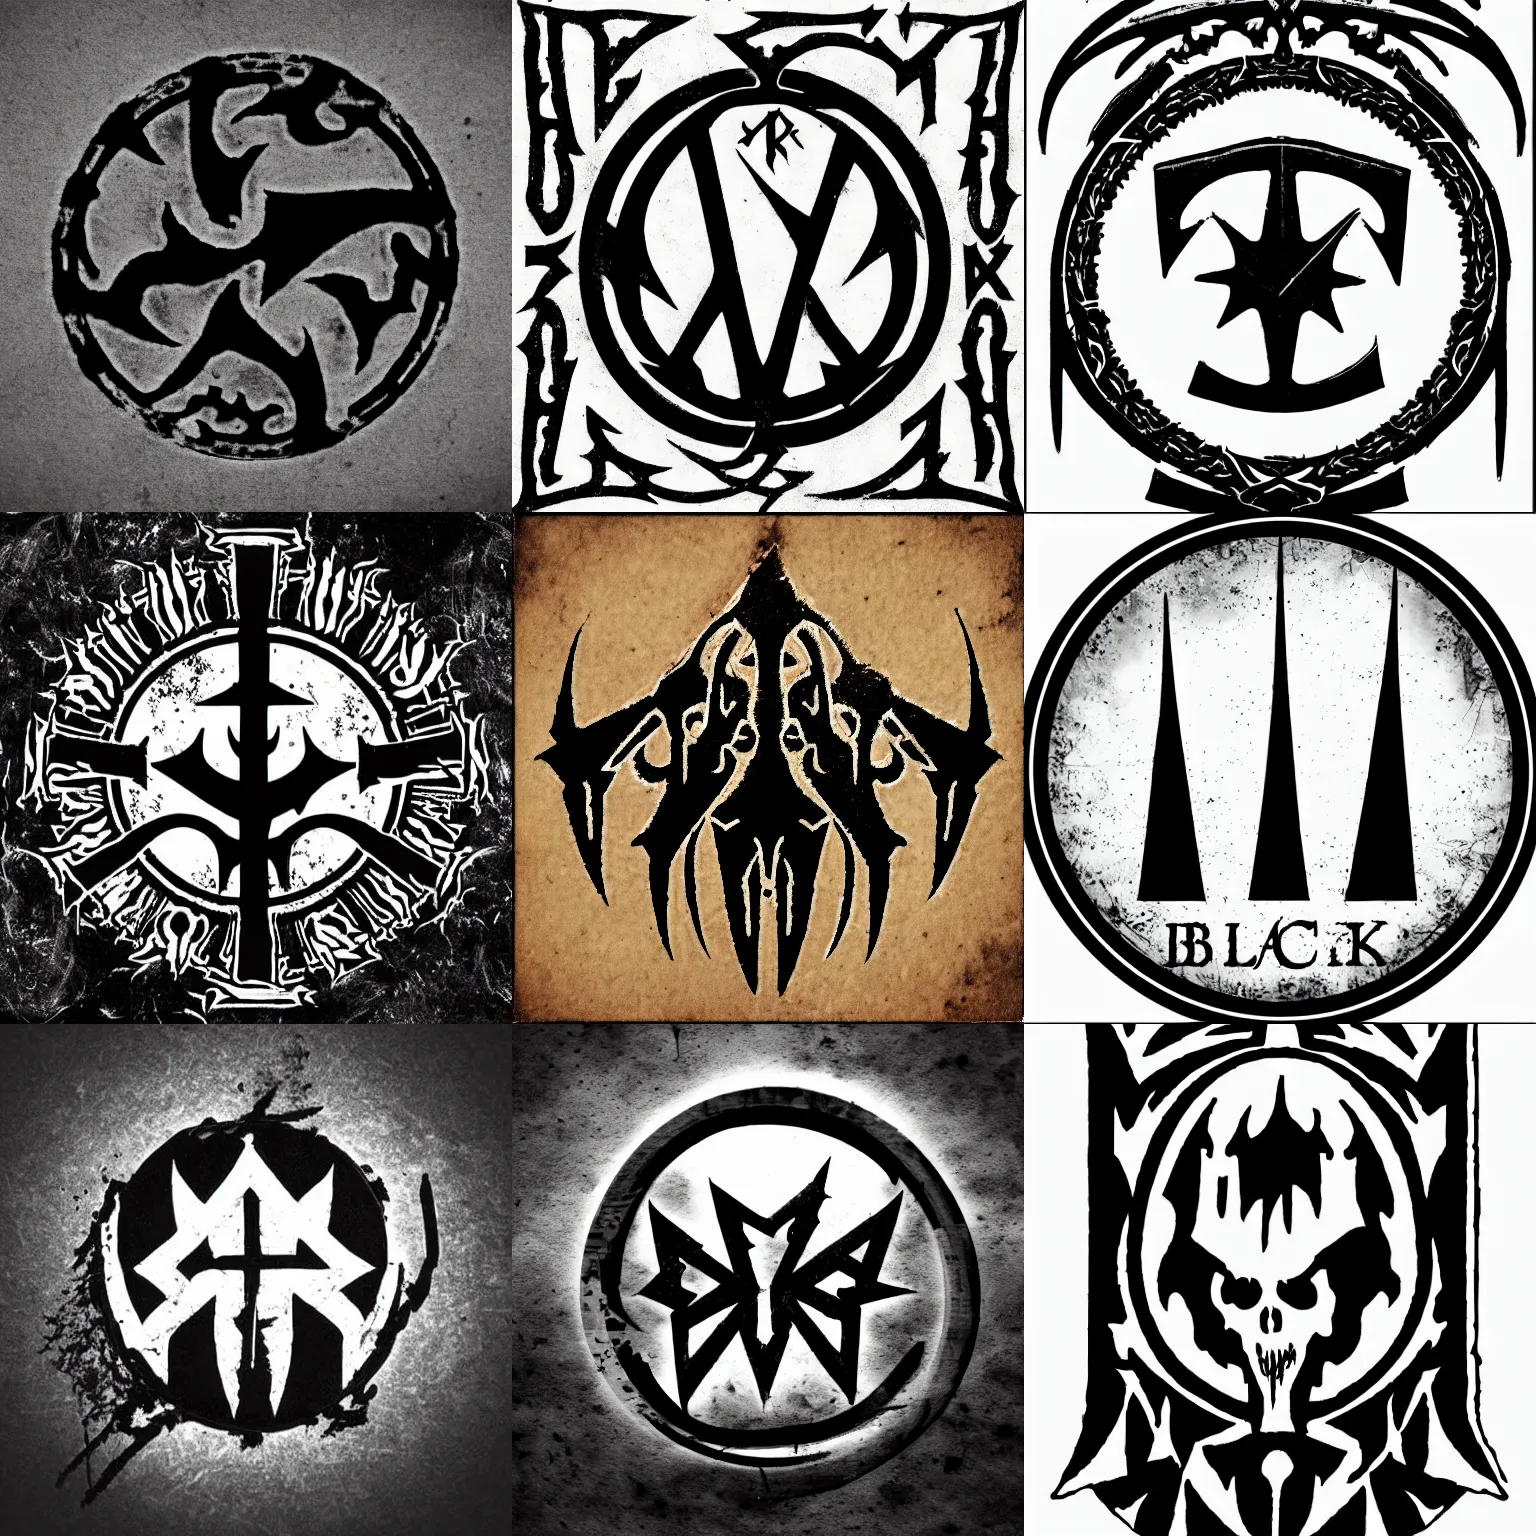 Prompt: black metal band logo